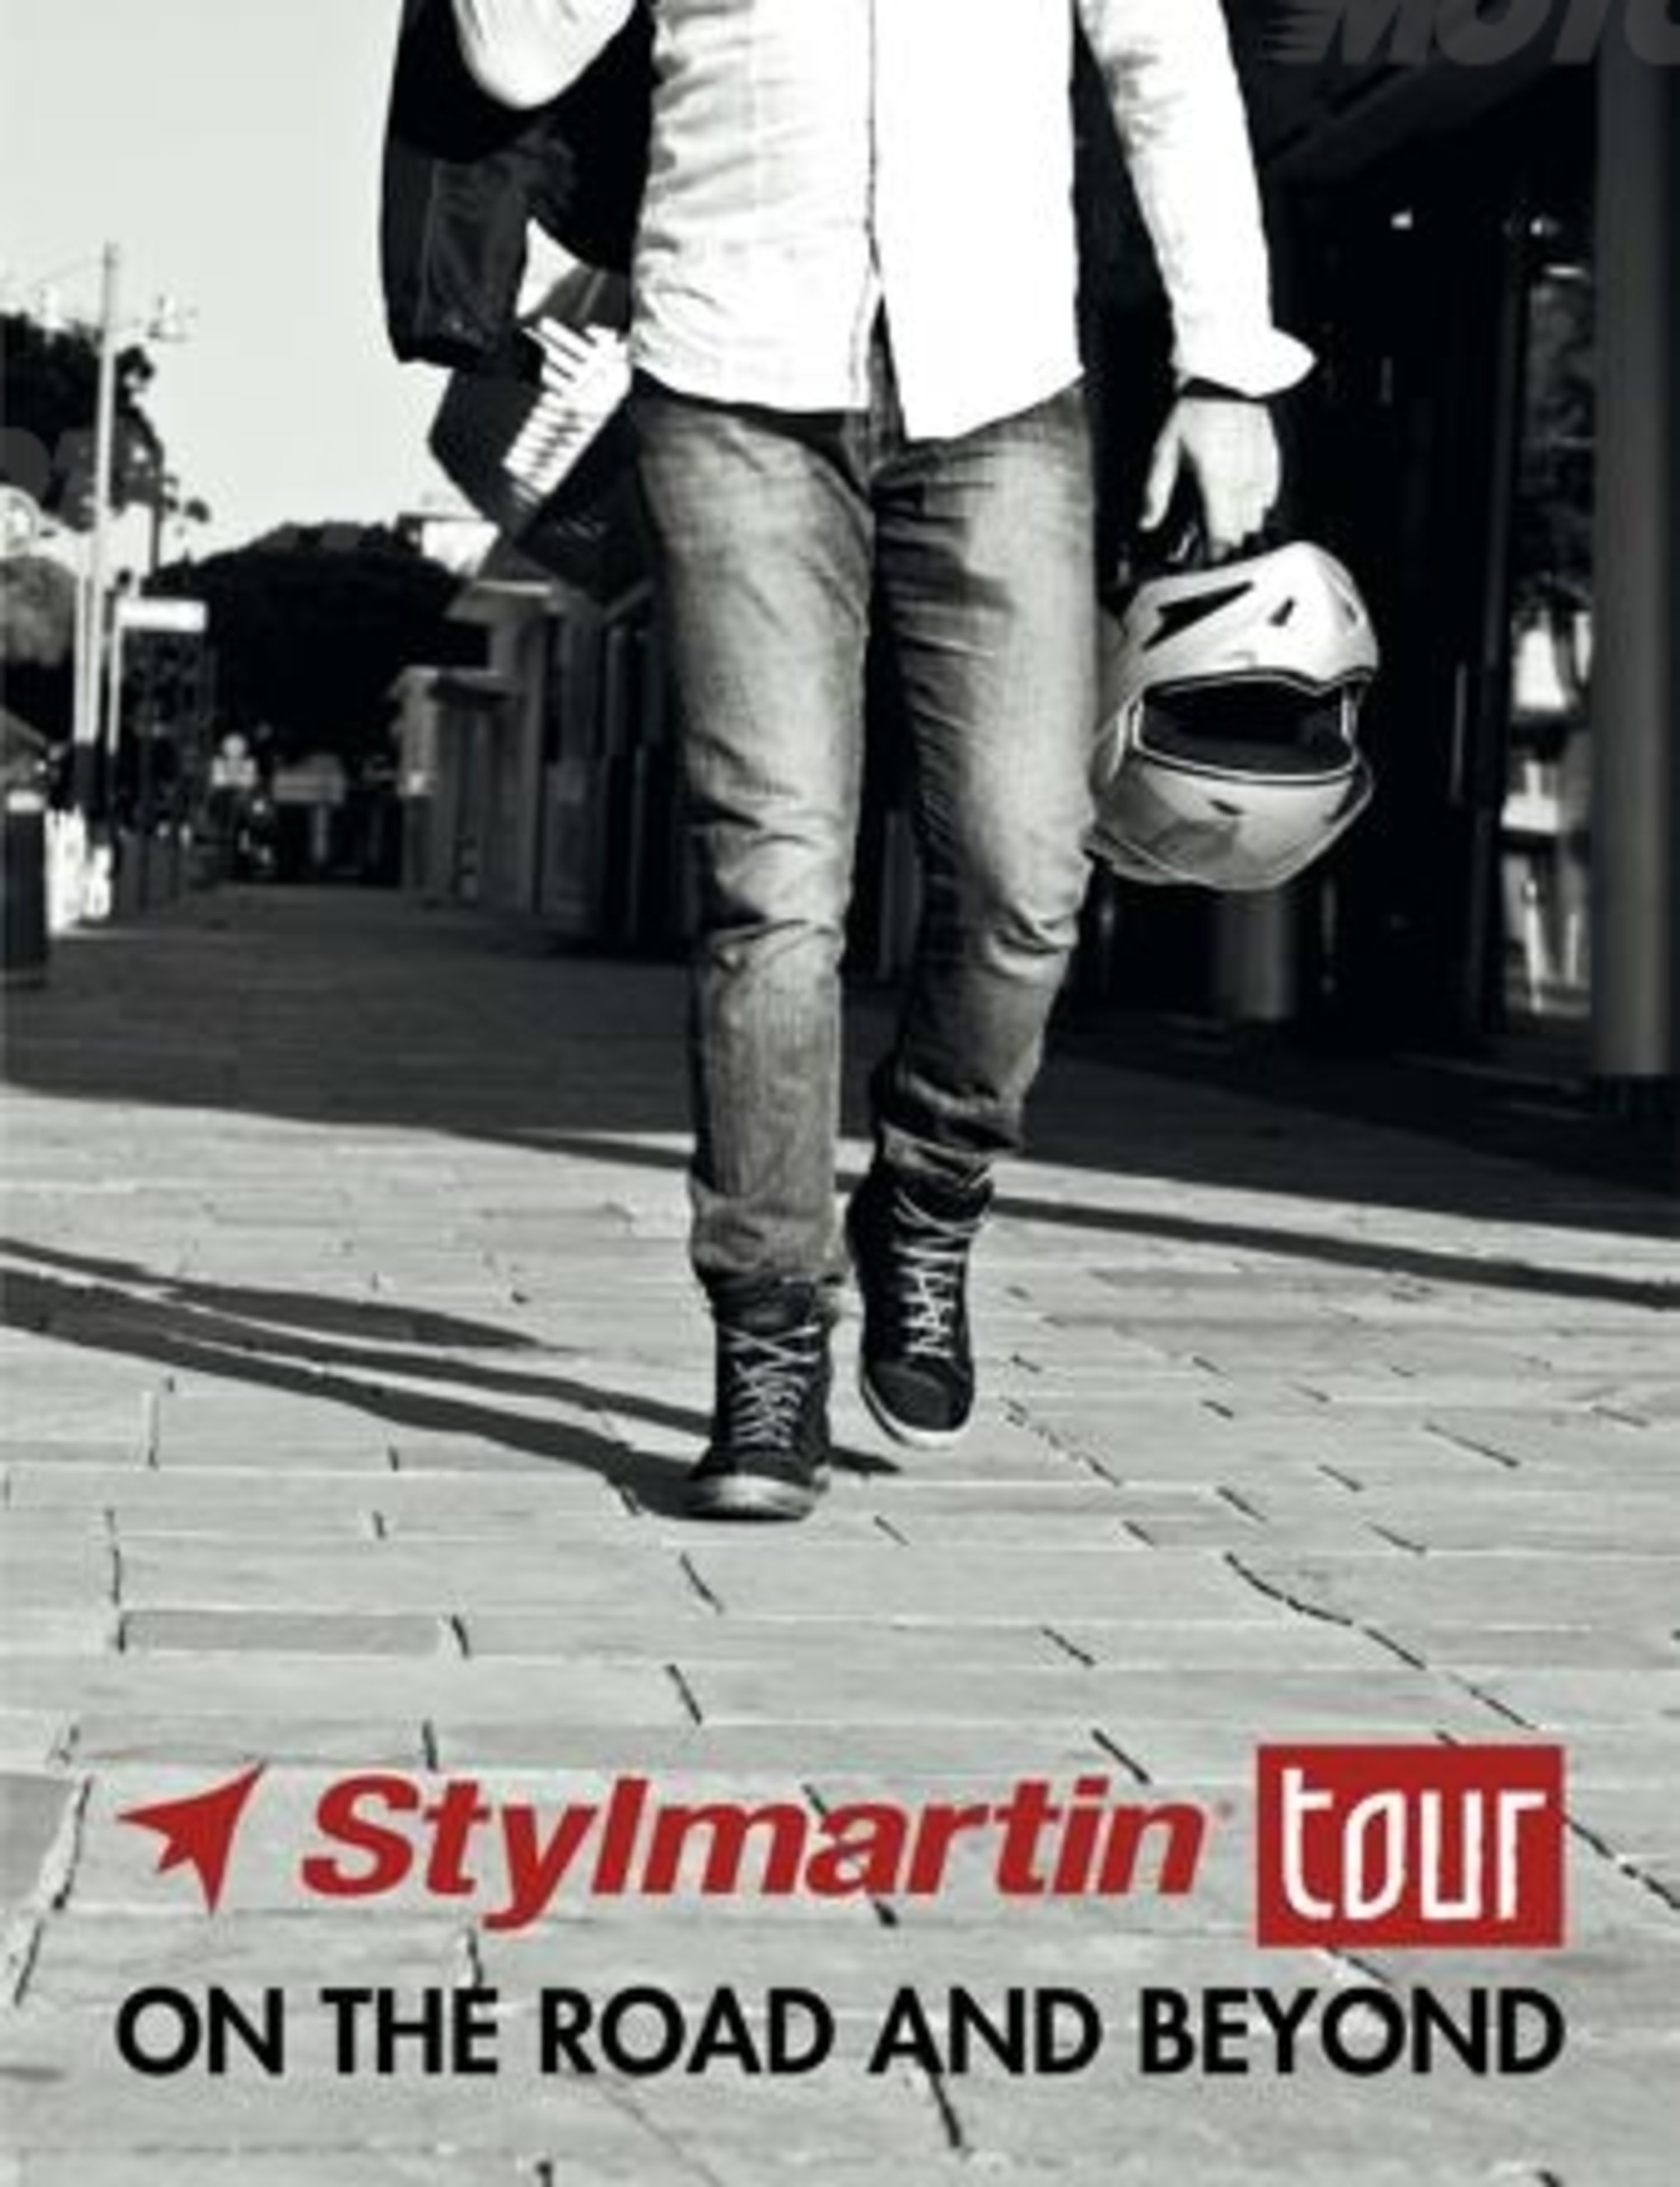 Al via il 14 aprile lo Stylmartin Tour